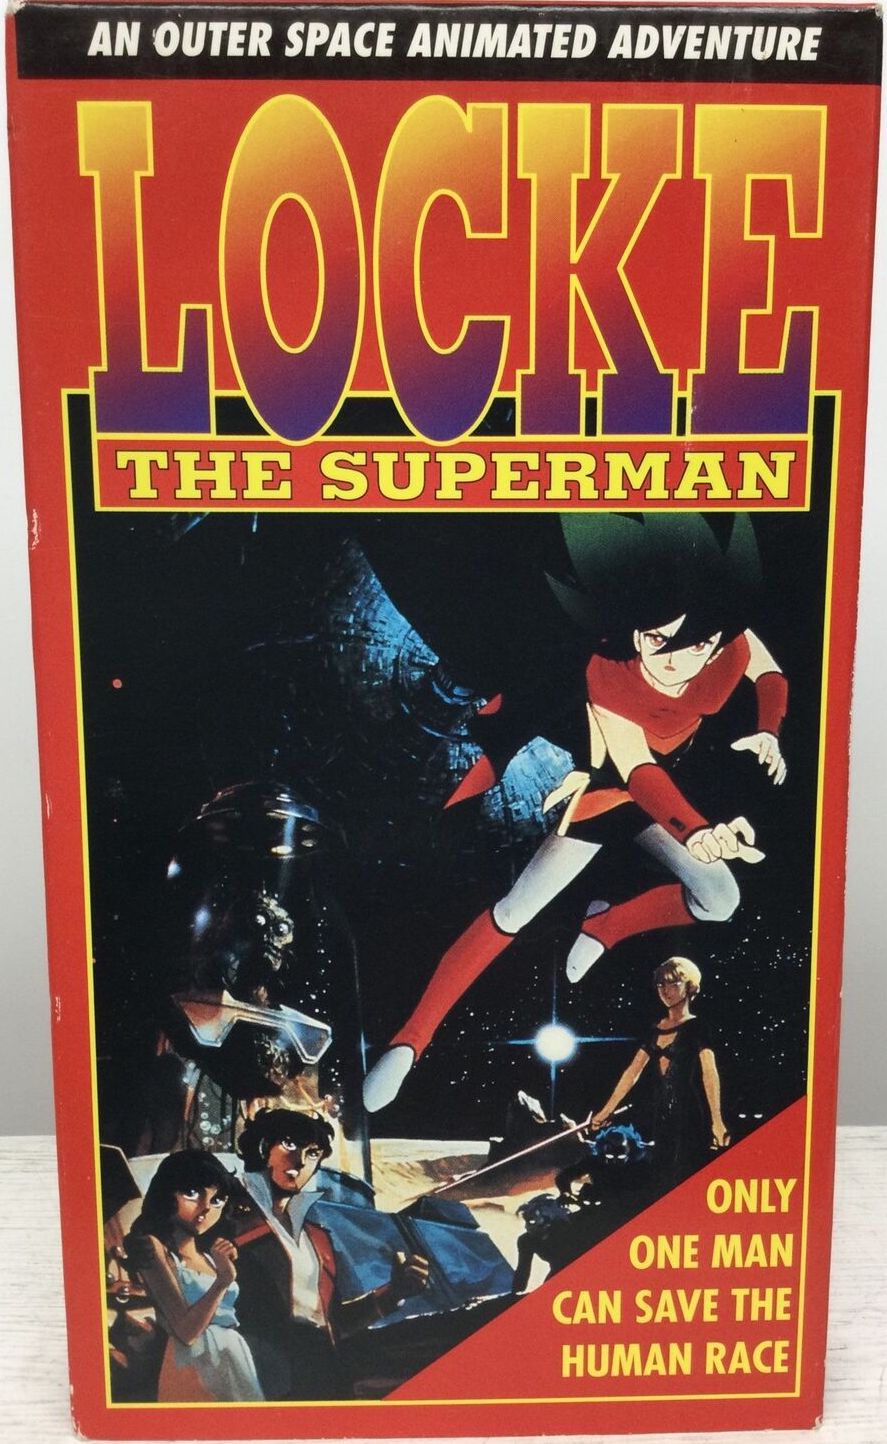 "Red Box" Locke the Superman VHS